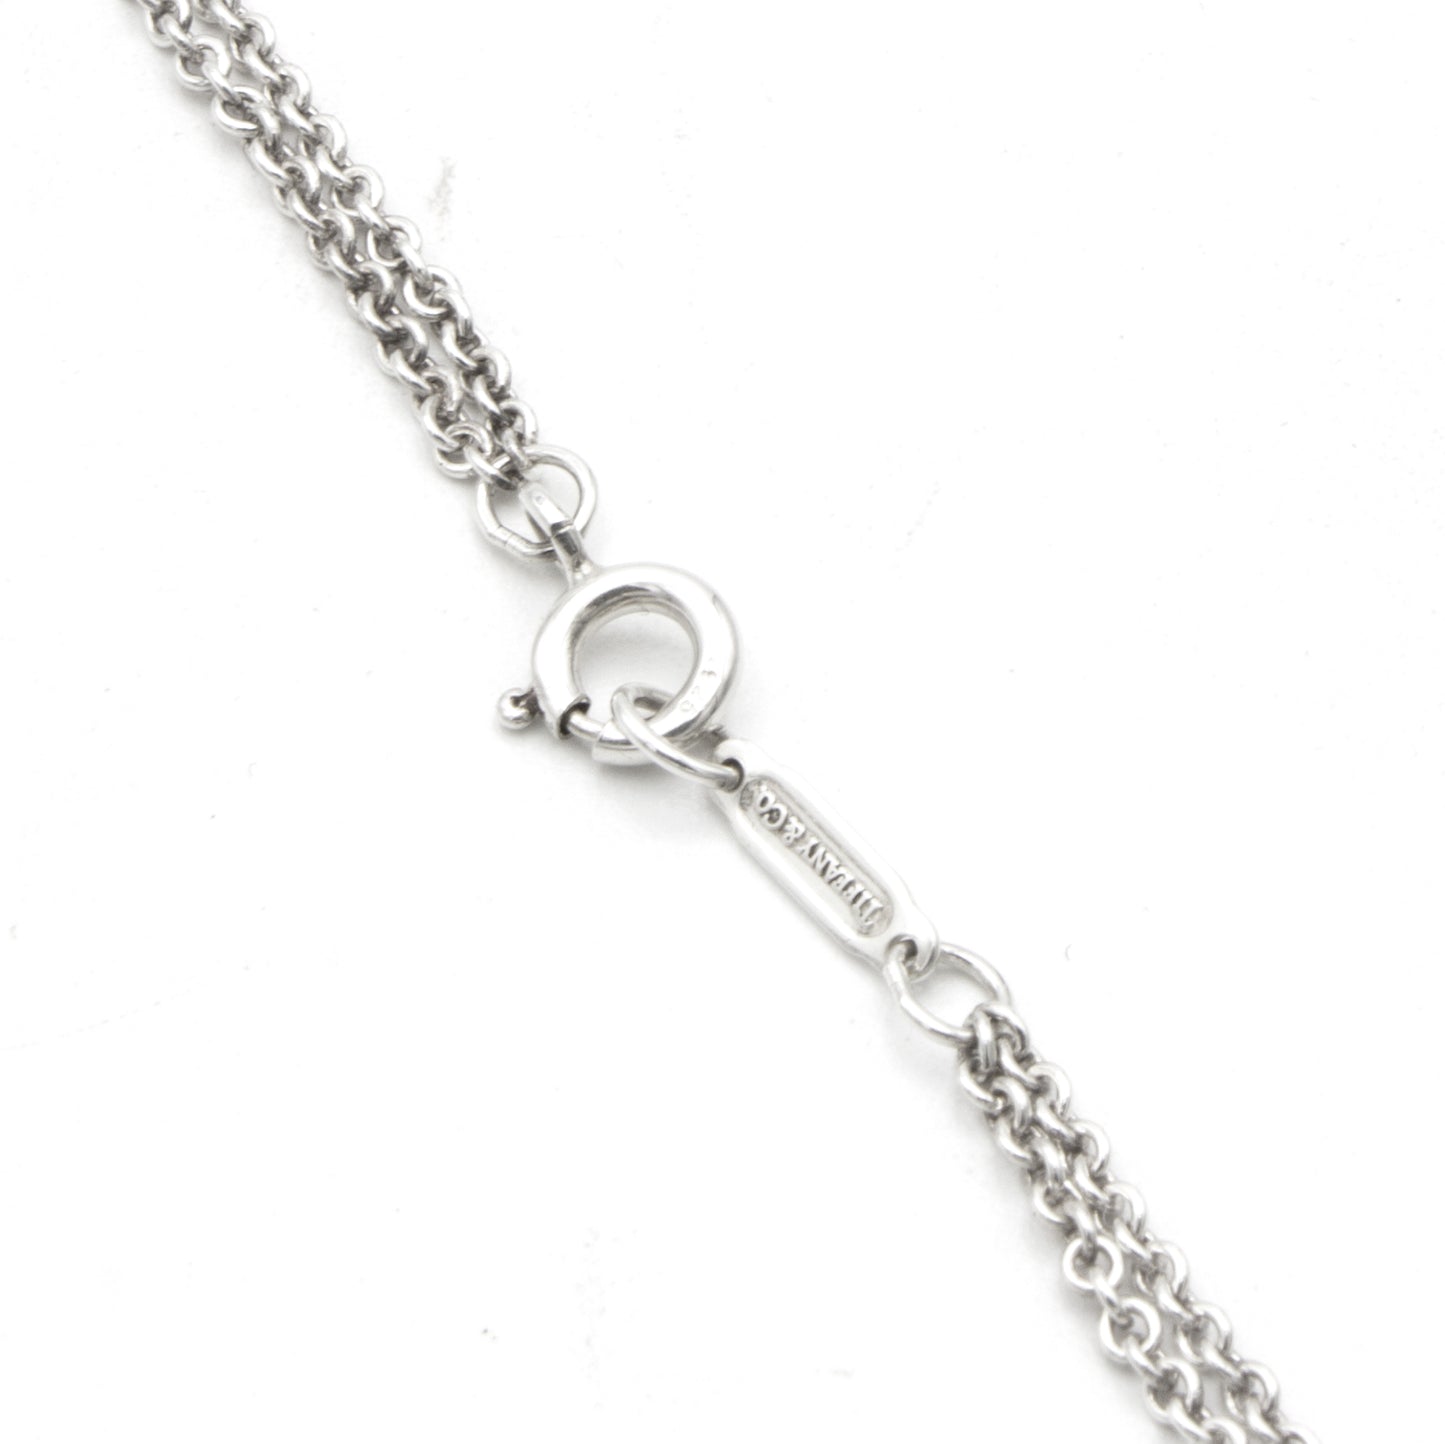 Tiffany & Co Infinity necklace